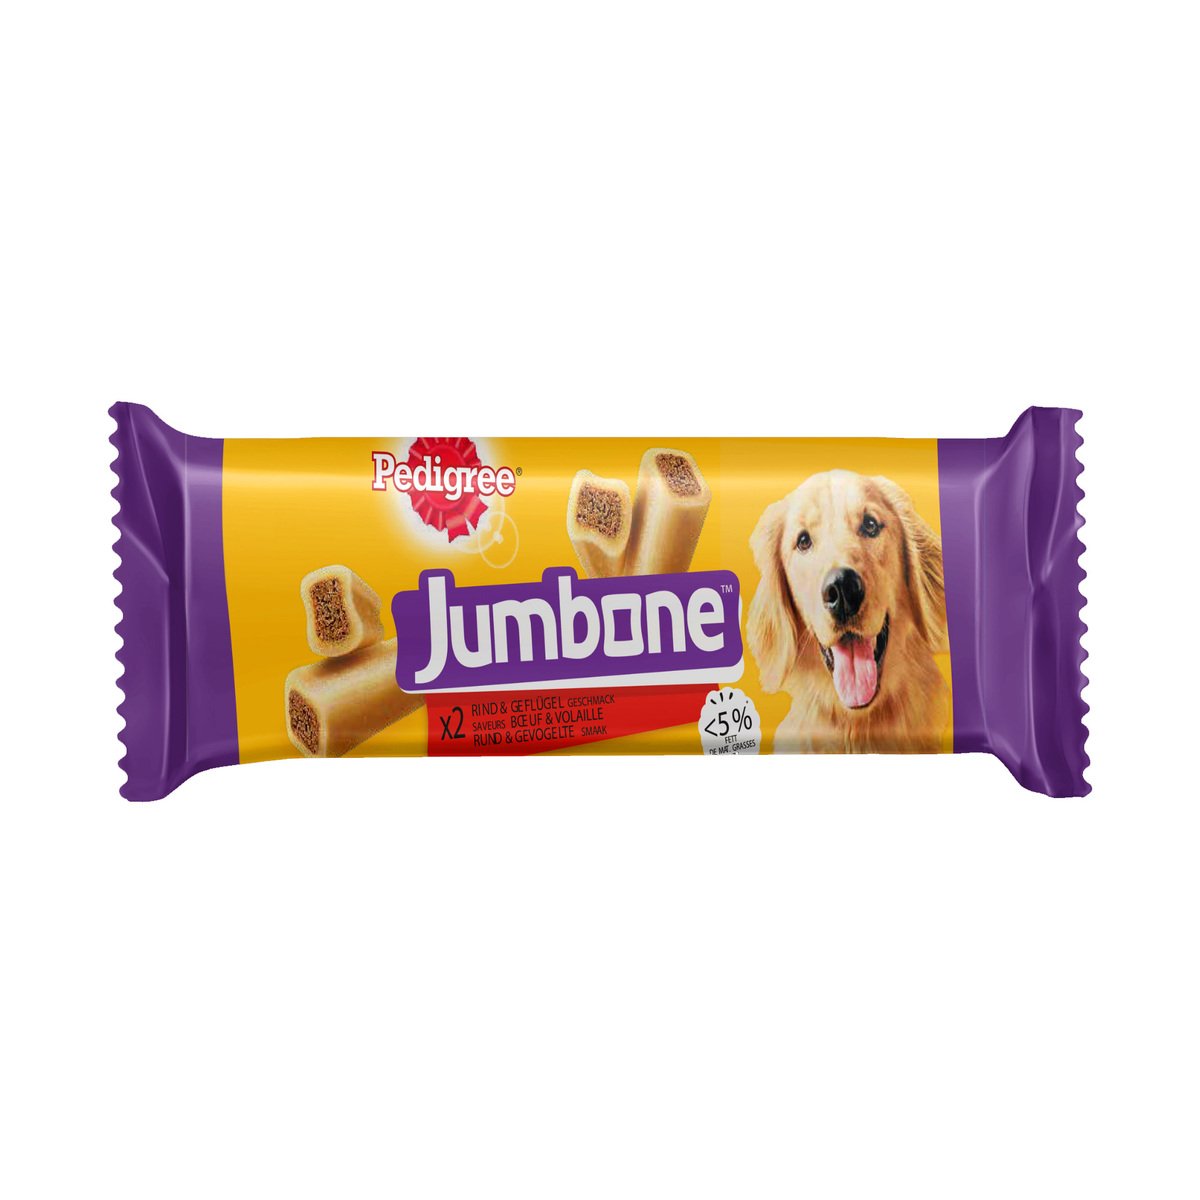 Pedigree Jumbone Dog Food 180 g